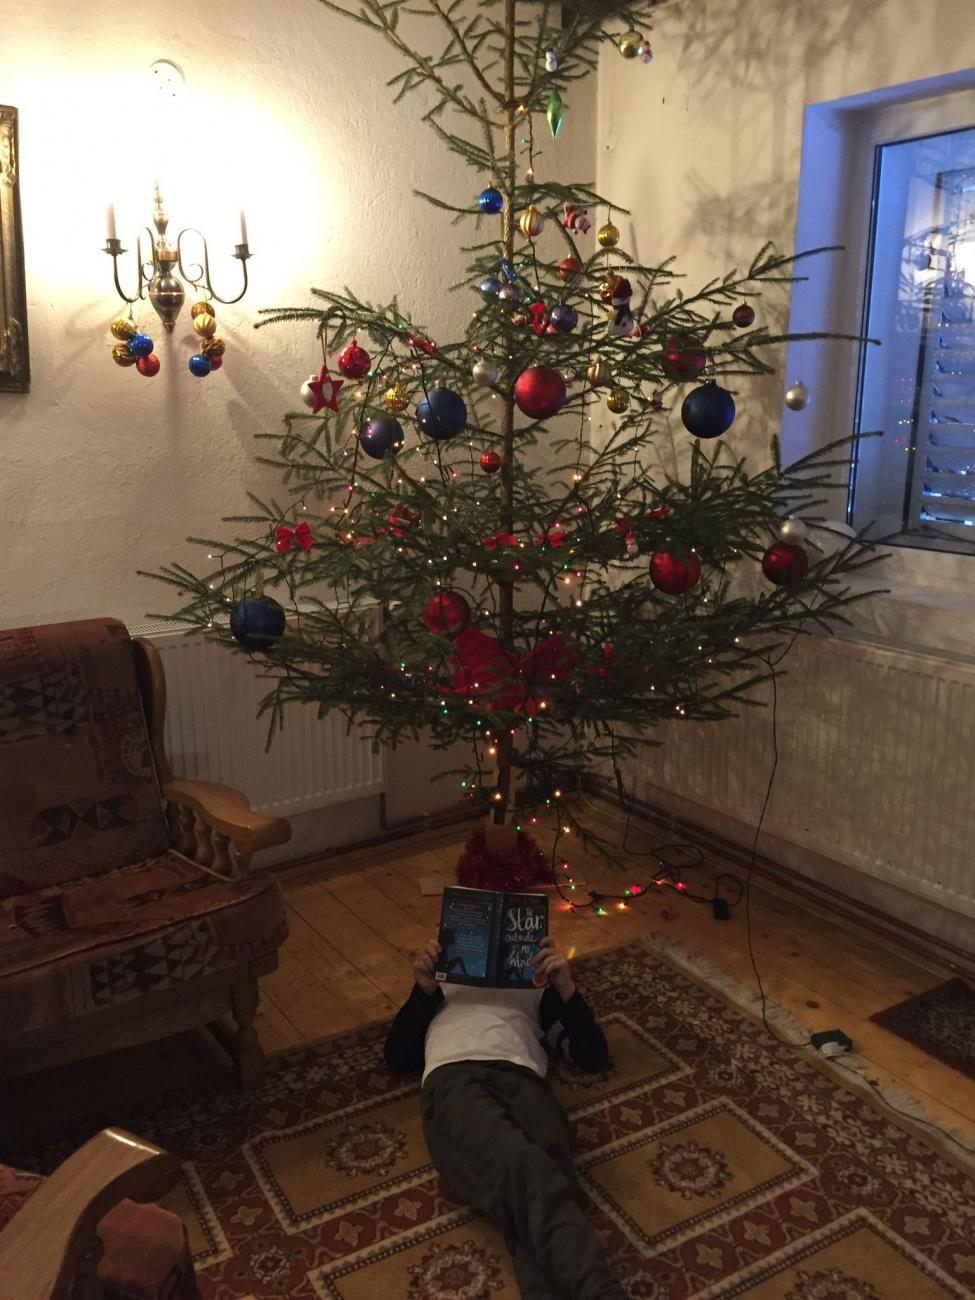 Boy reading under Christmas tree